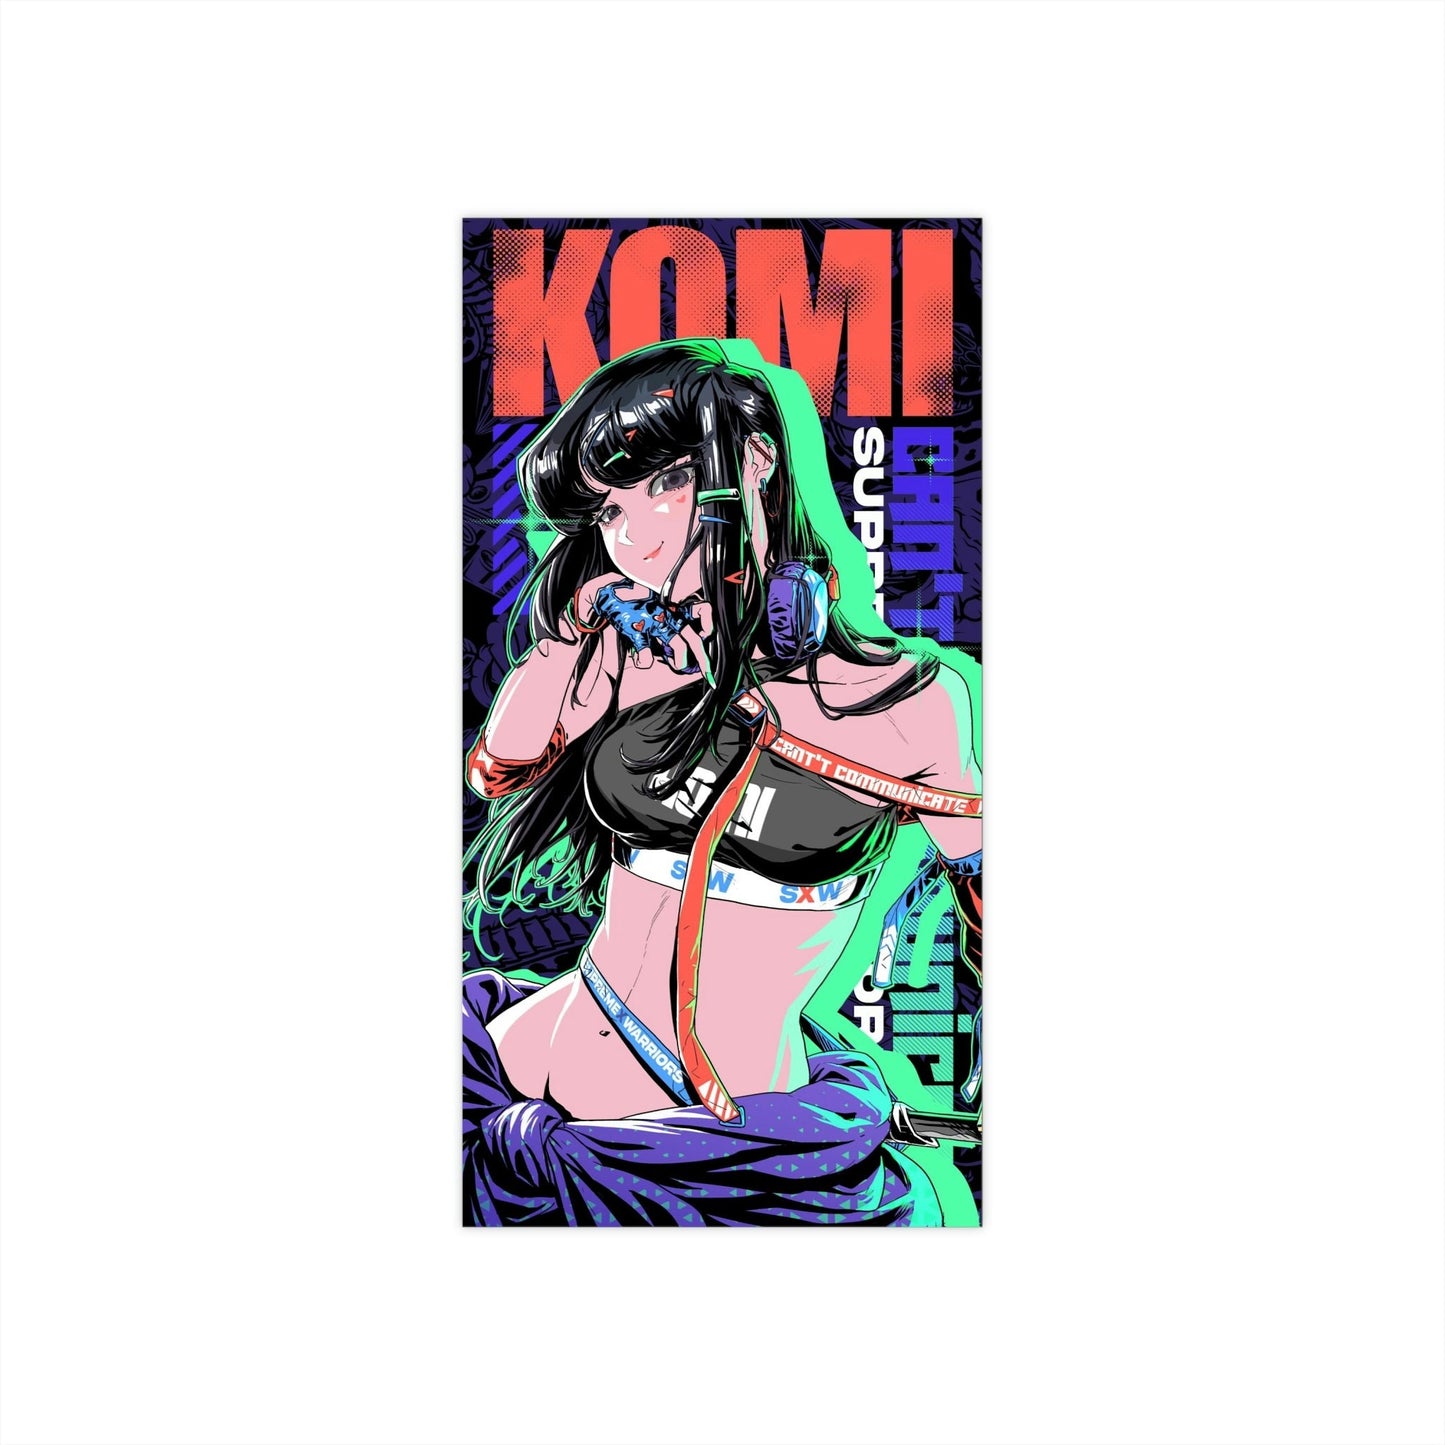 Komi / Sticker